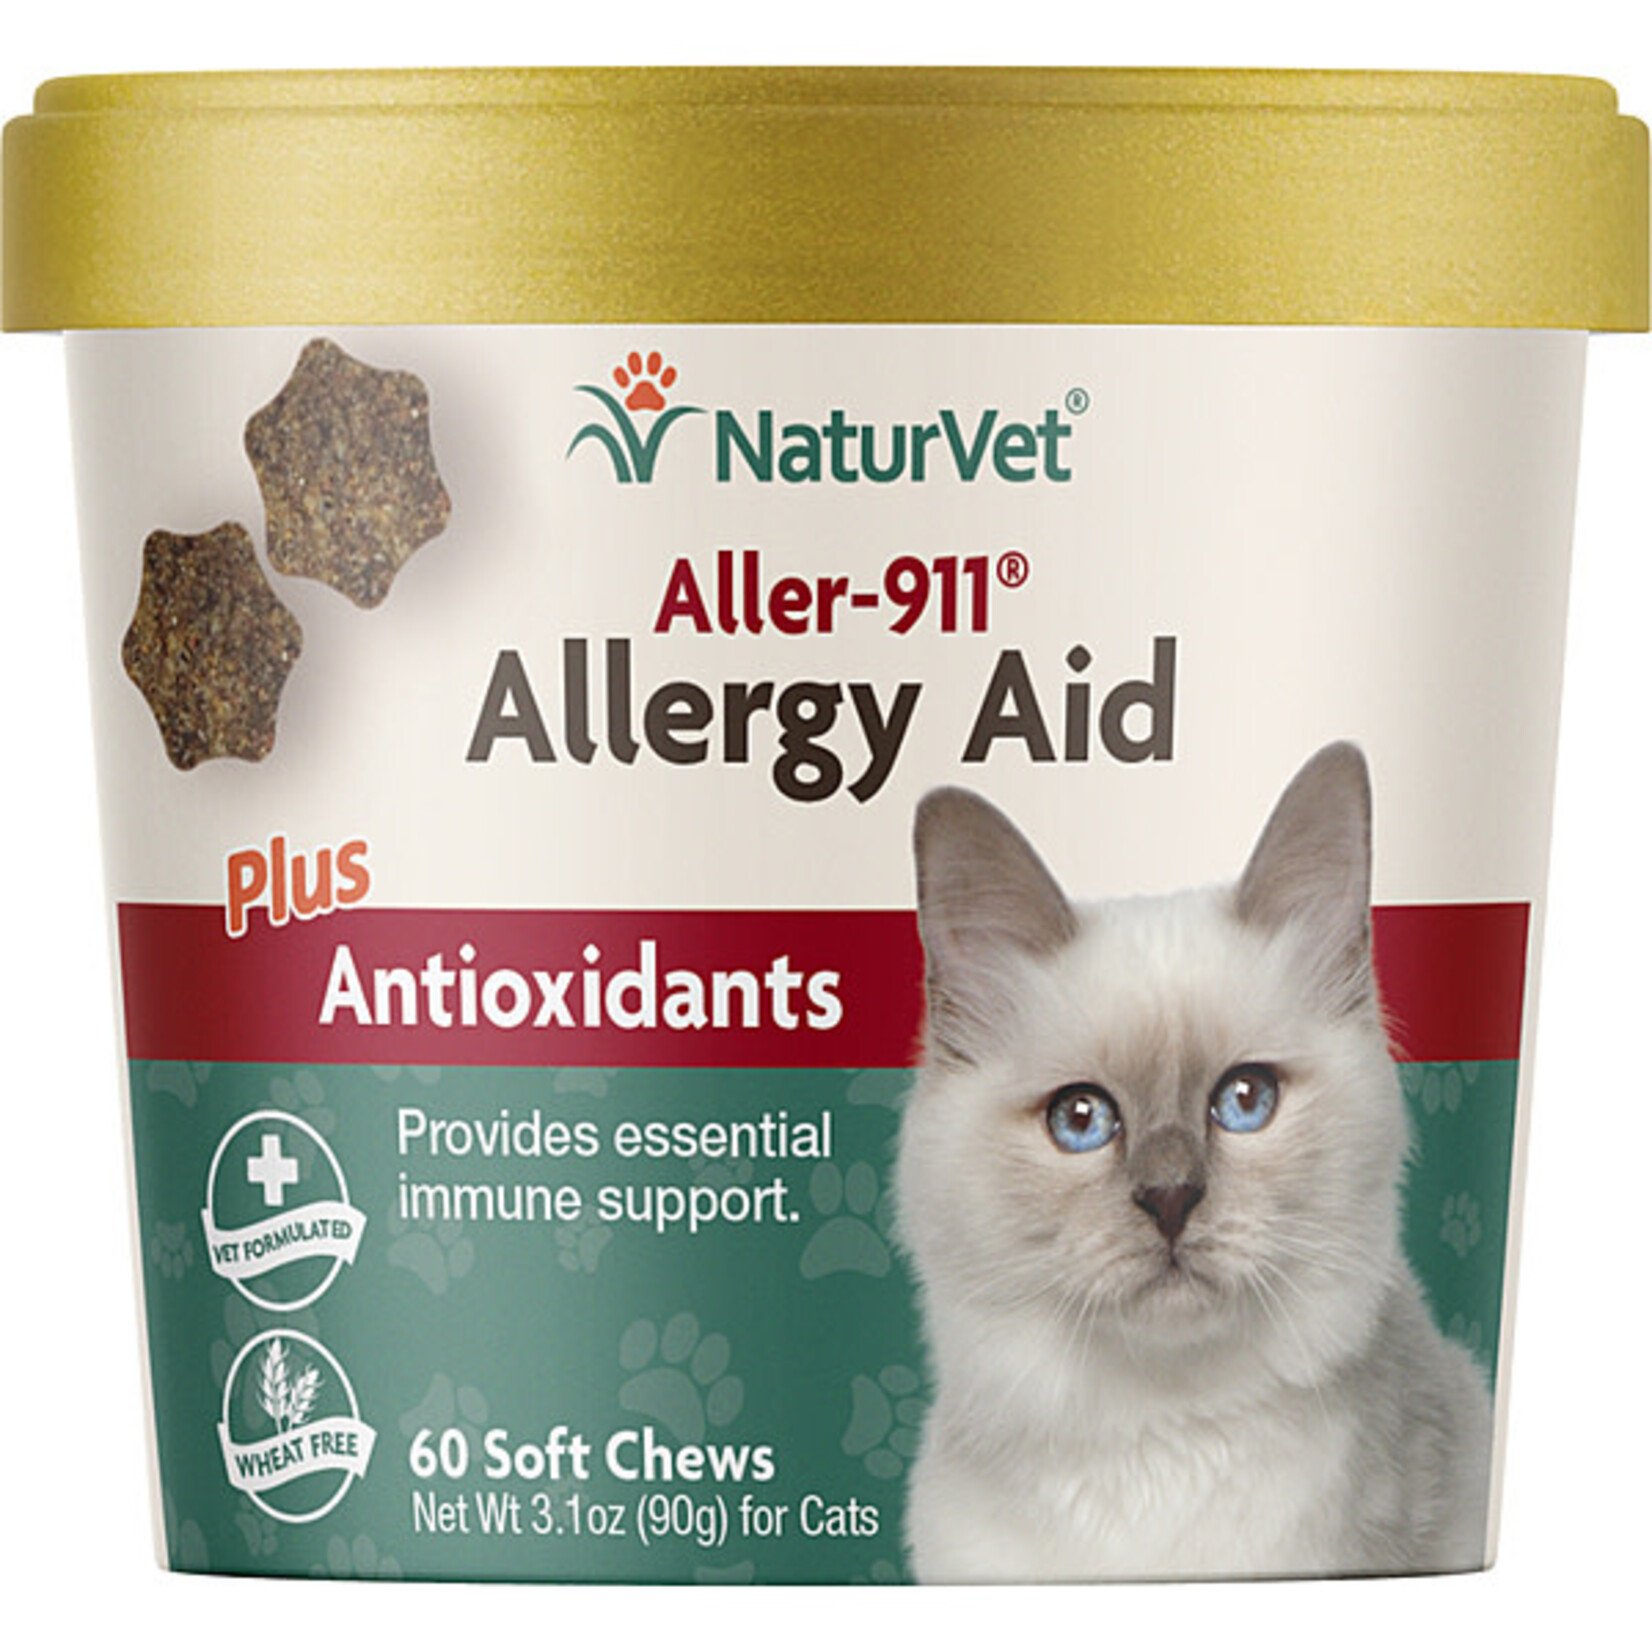 NaturVet 60 Soft Chew Aller911 Allergy Aid + Antioxidants cat